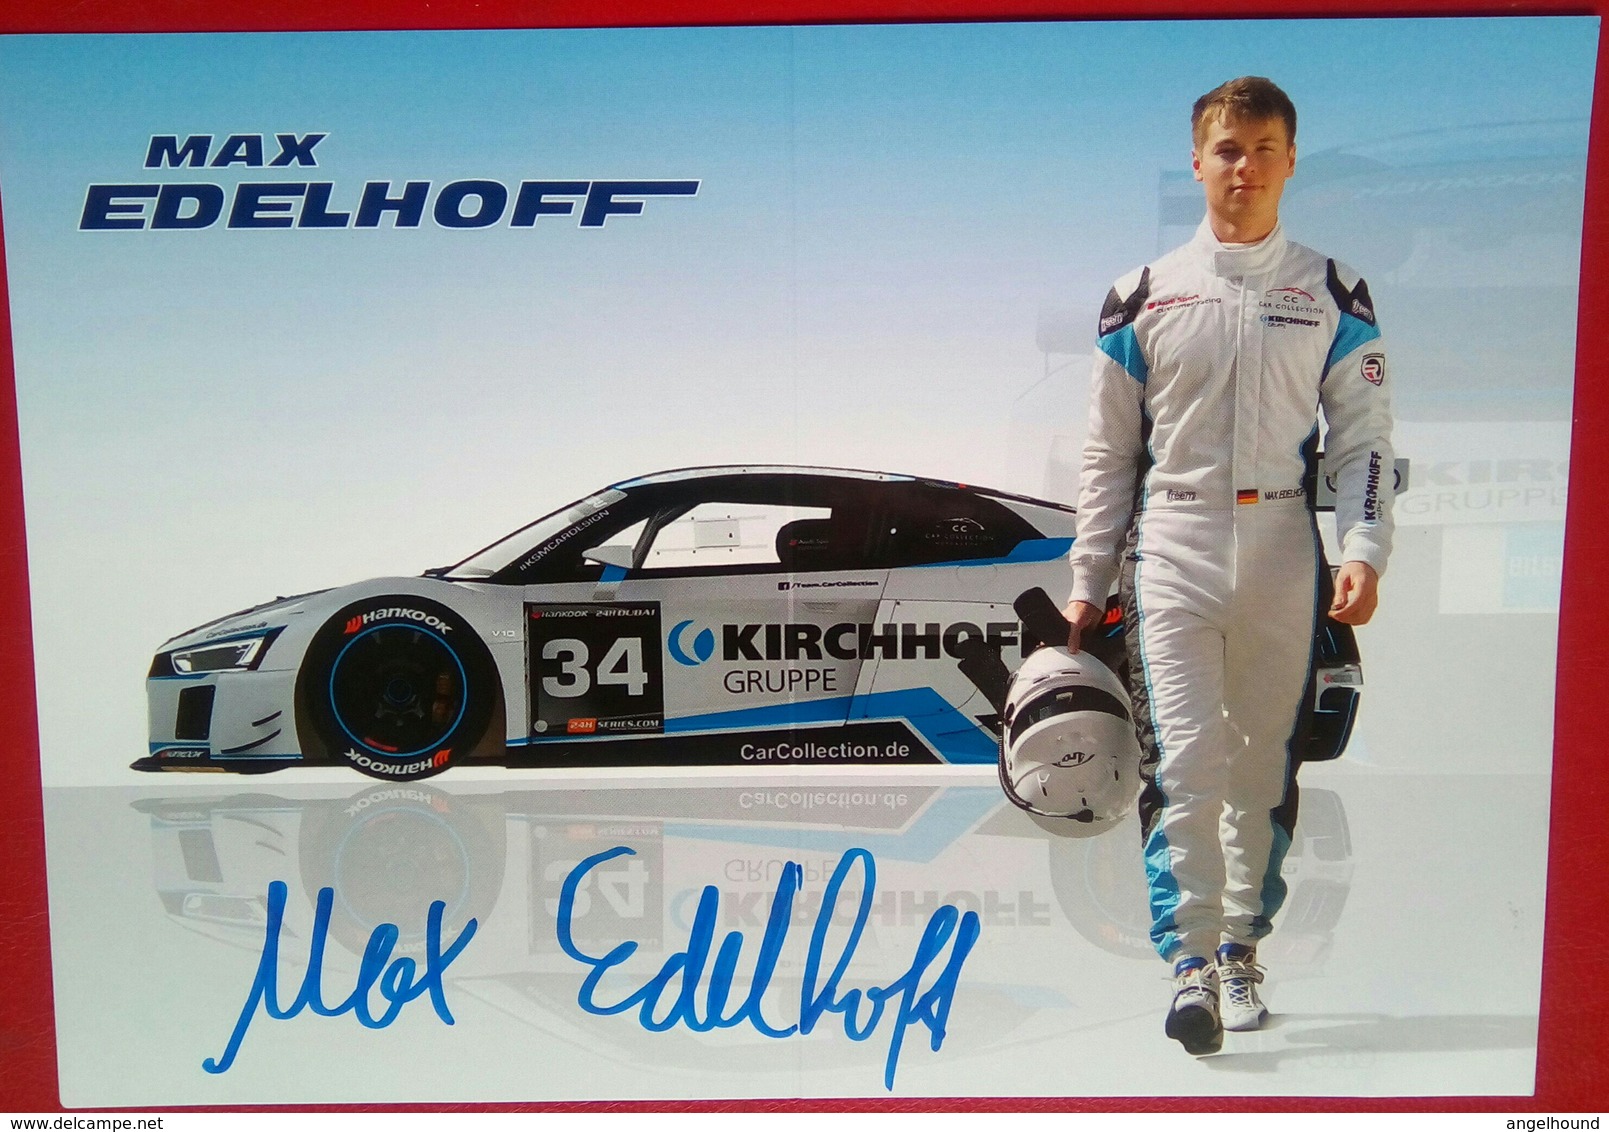 Max Edelhoff - Autografi